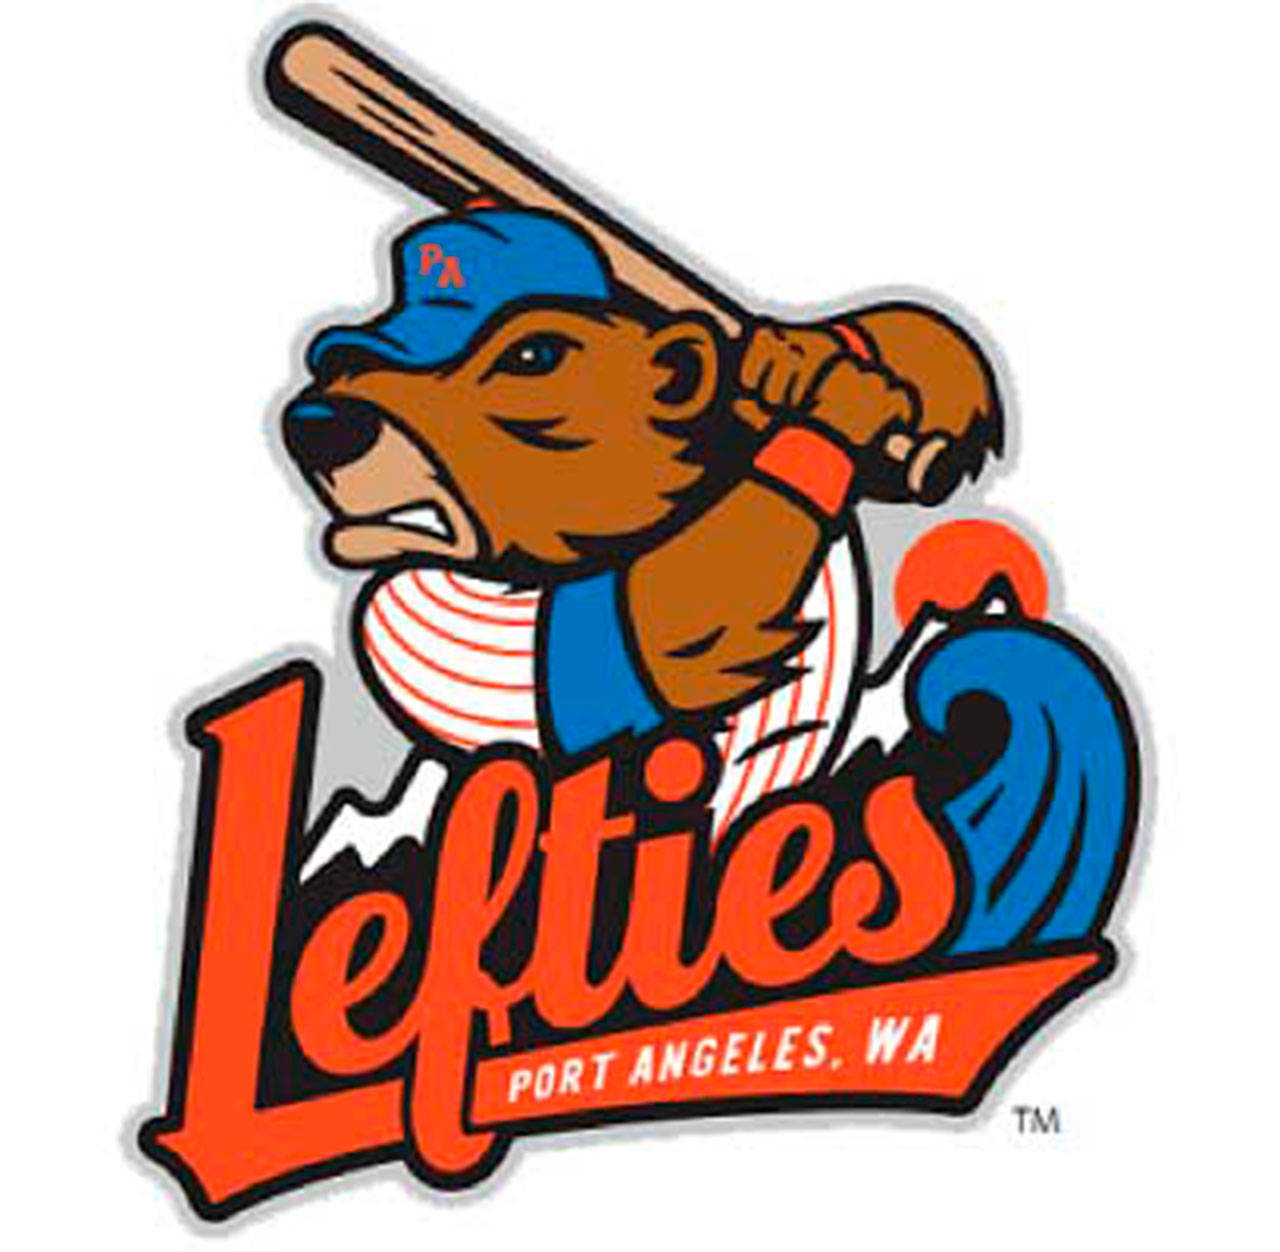 Lefties logo